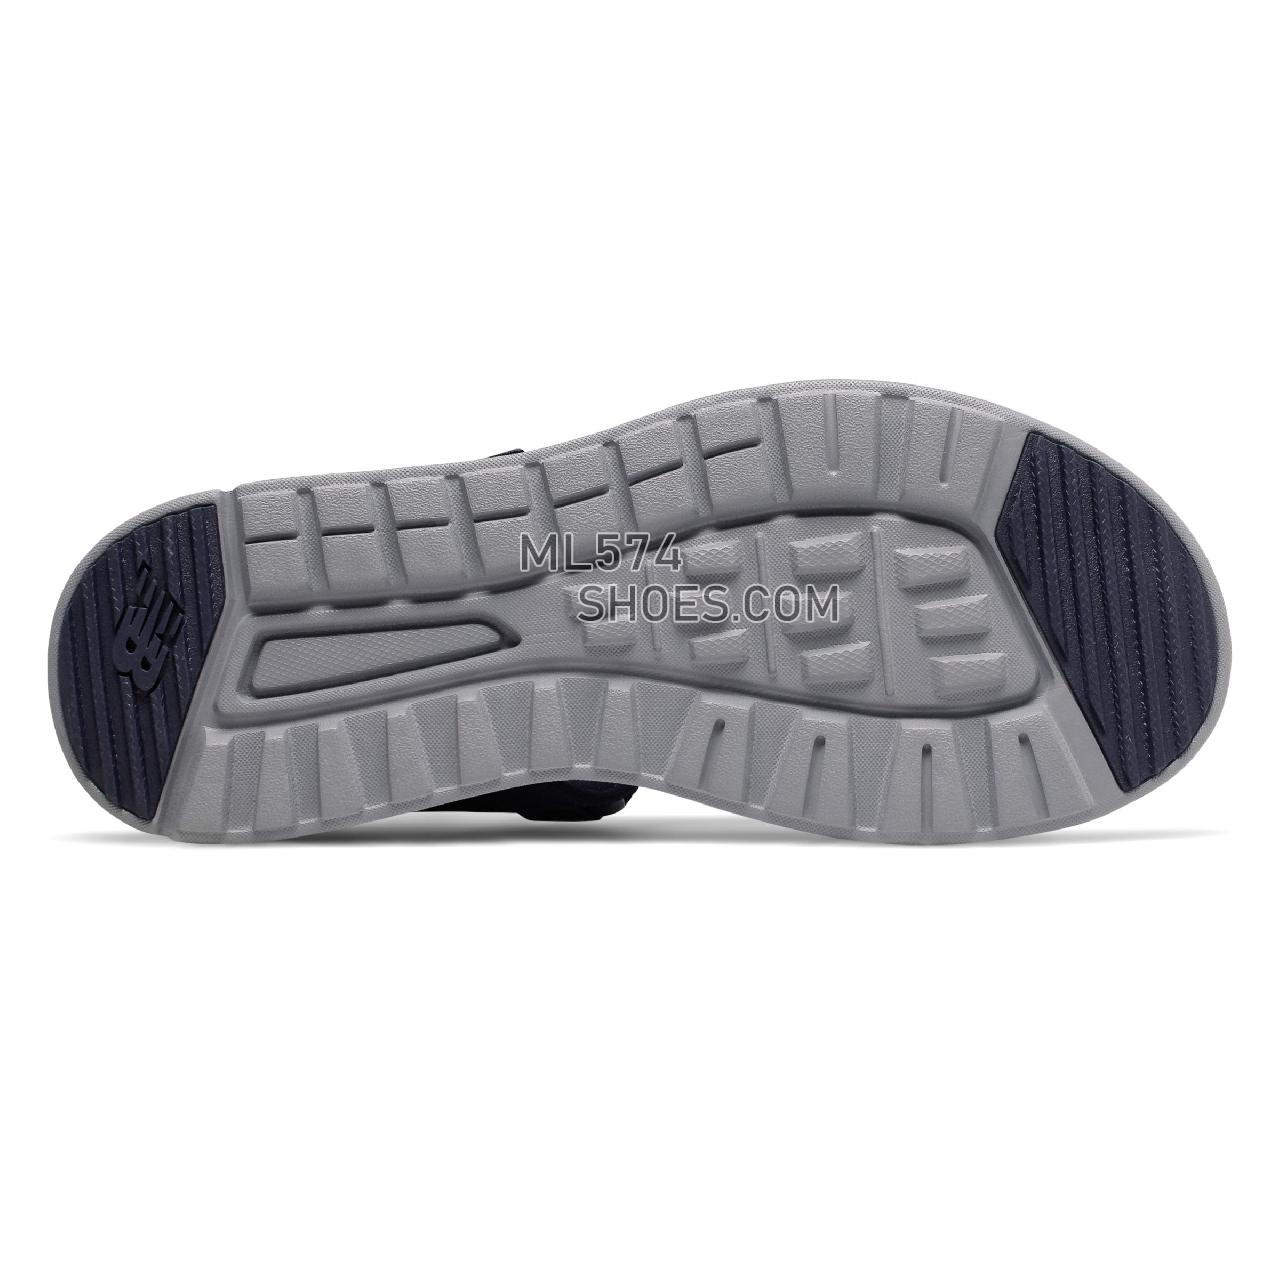 New Balance 250 - Men's Sandals - Pigment with Gunmetal - SUA250N1